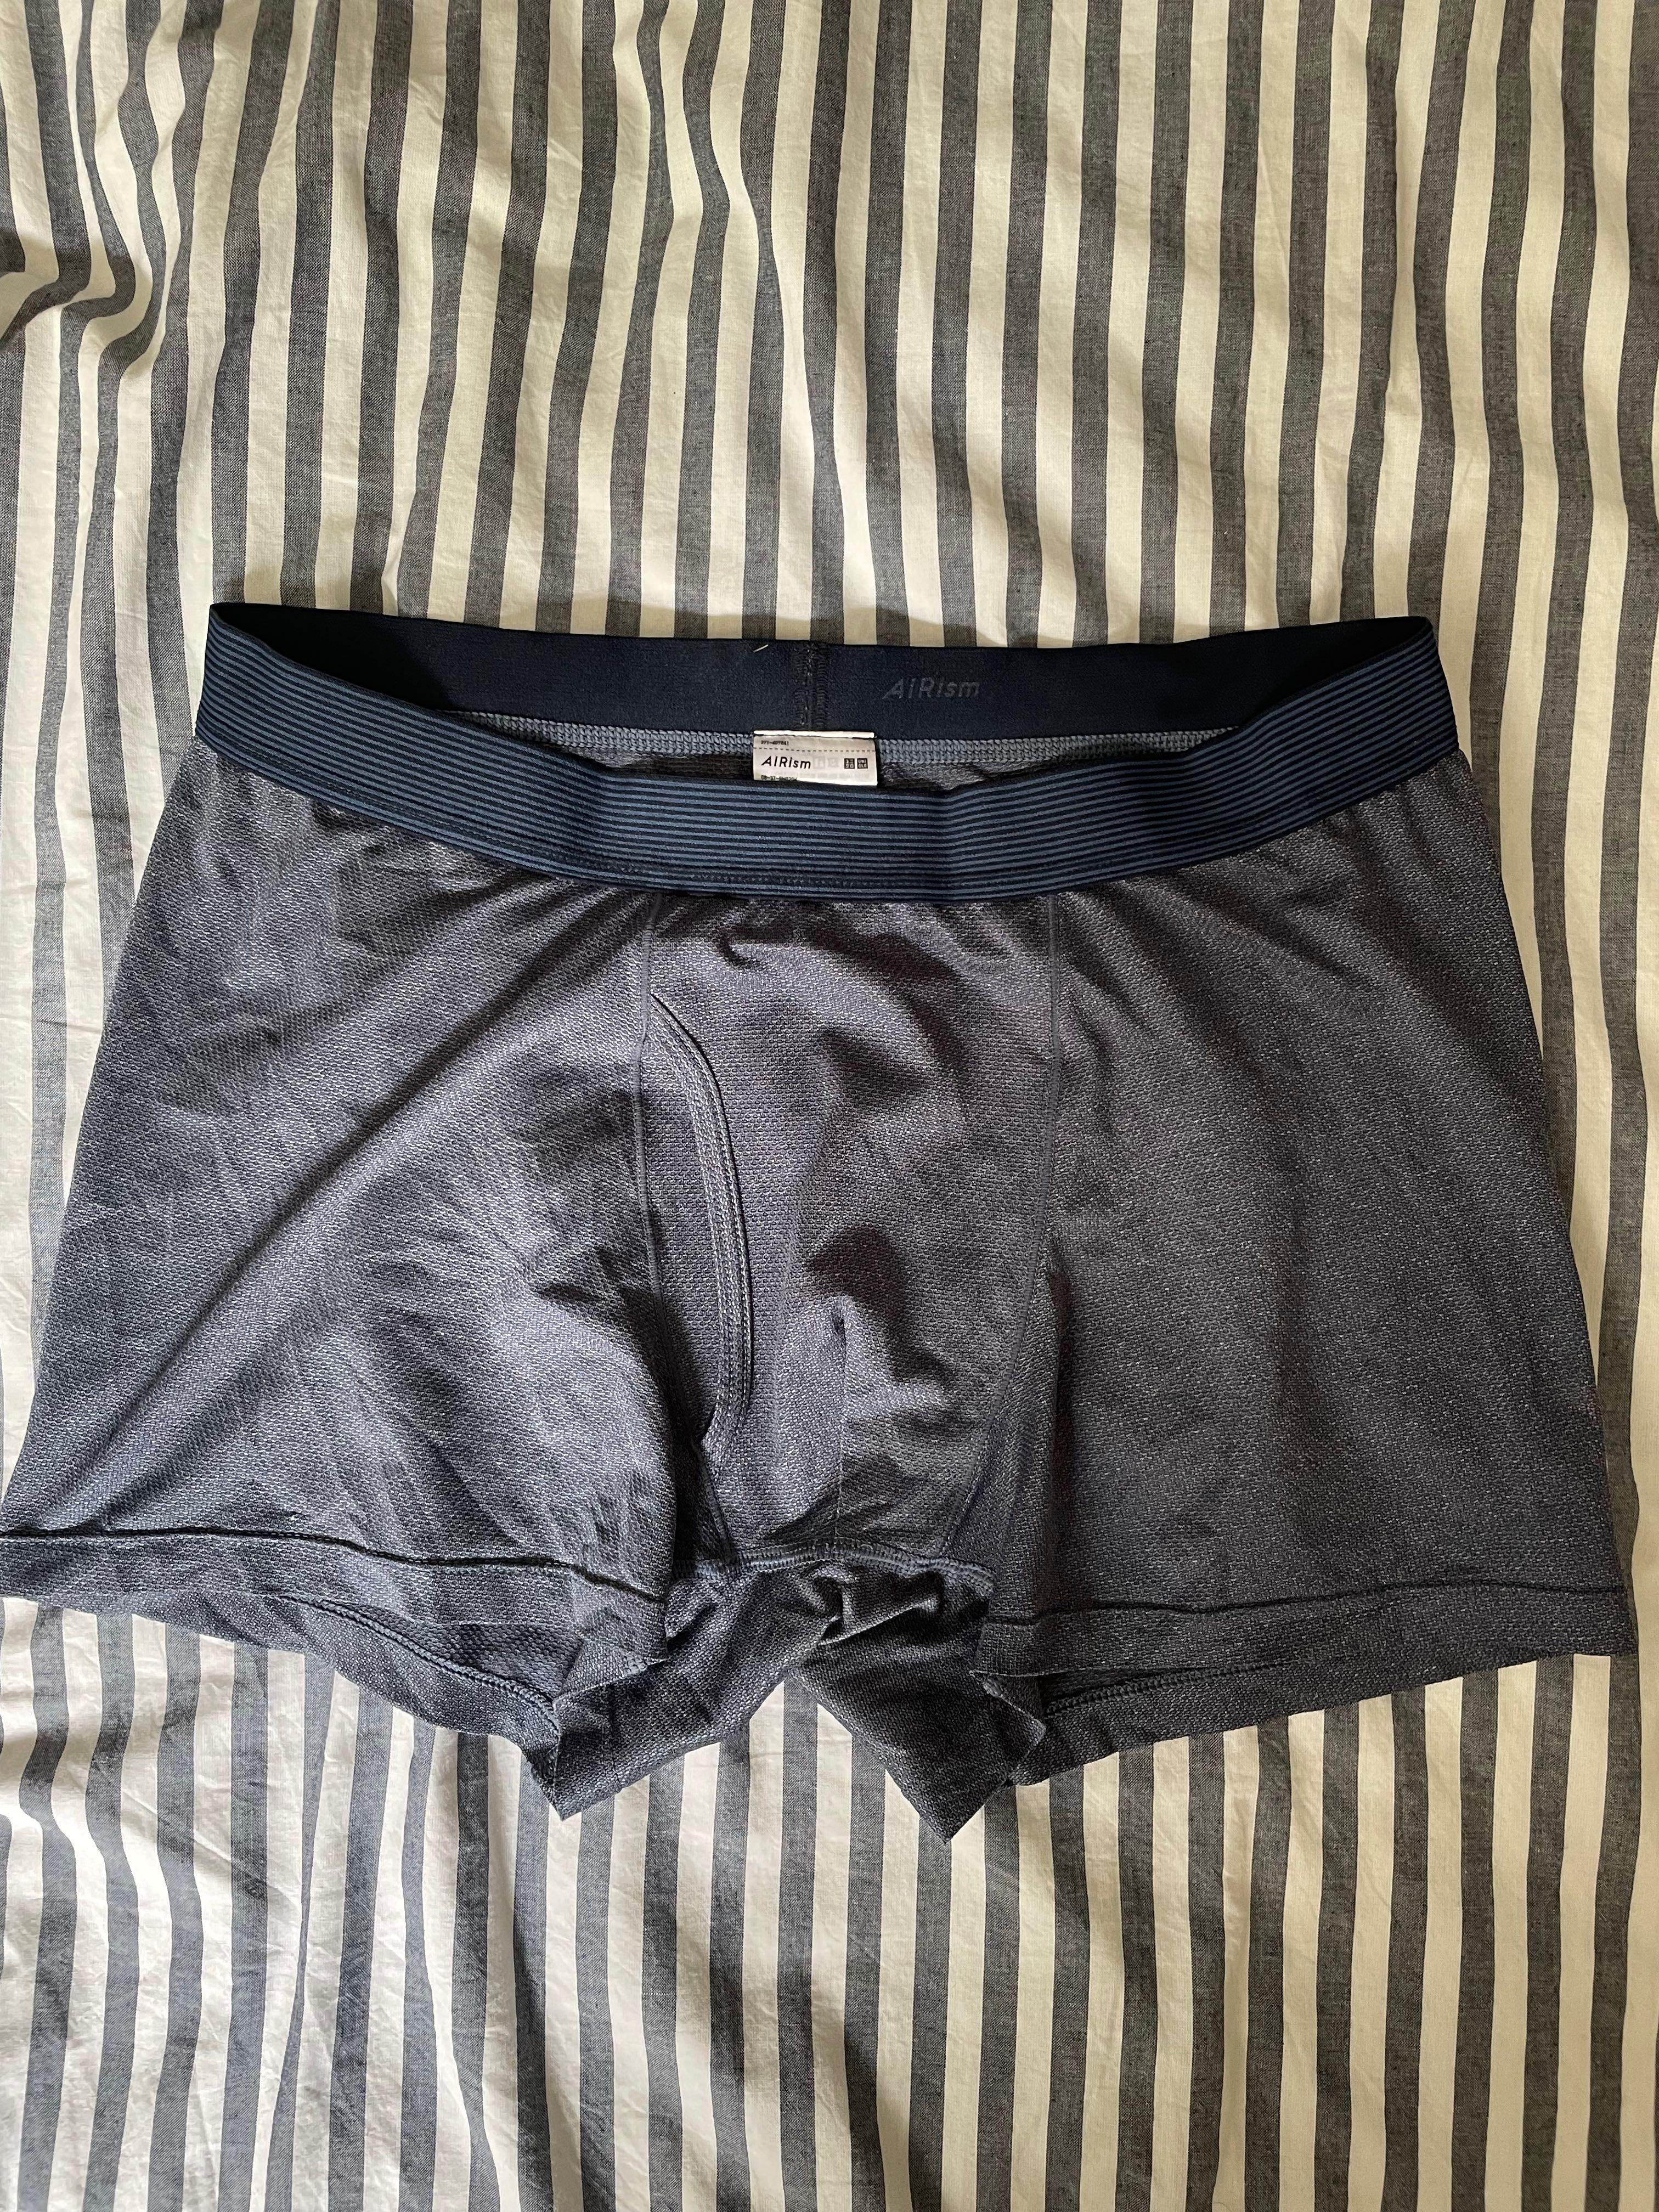 Uniqlo Airism Boxer Briefs (L), Men's Fashion, Bottoms, New Underwear on  Carousell